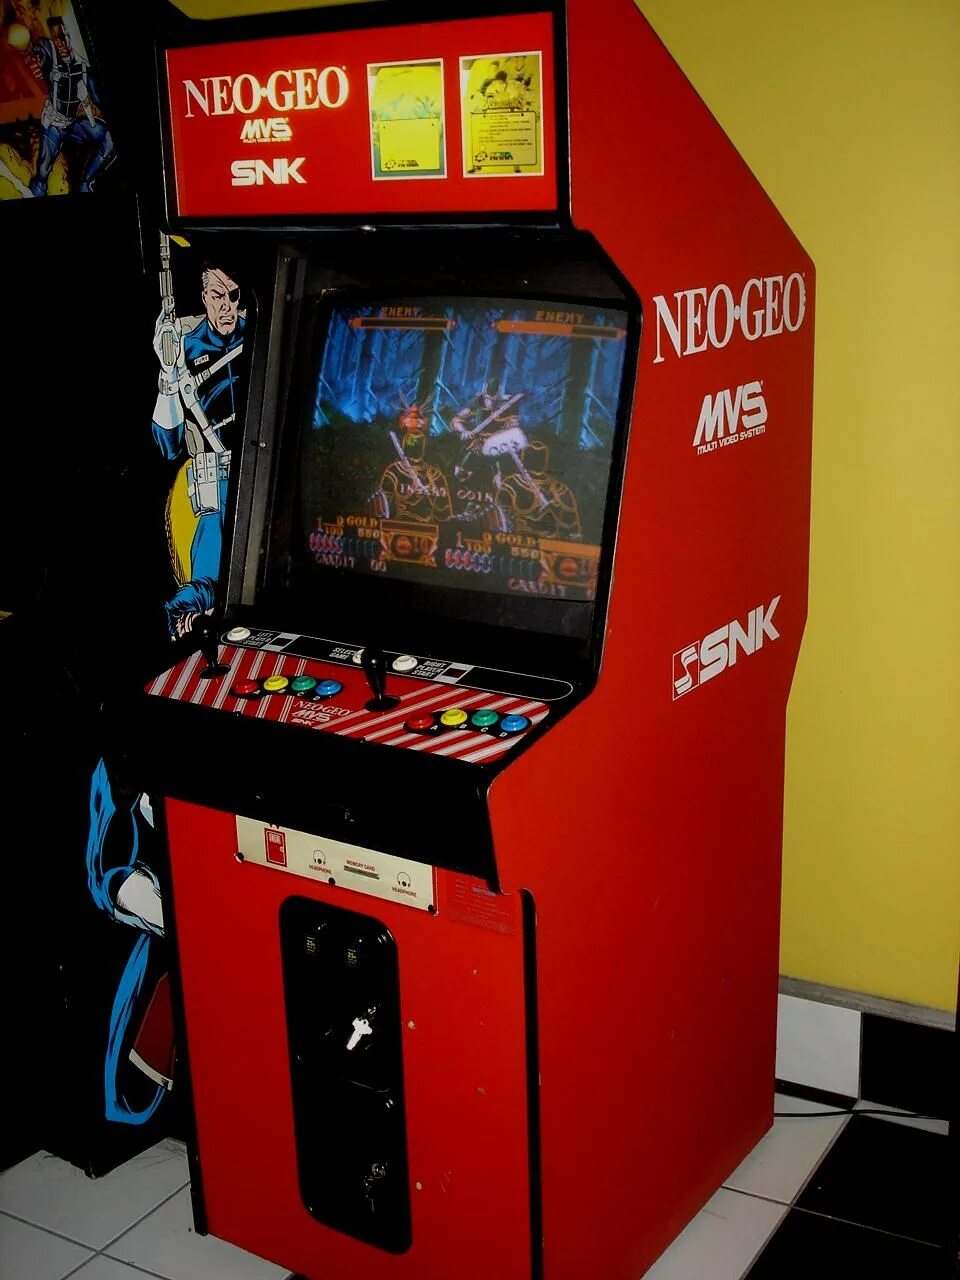 Игровой автомат пабг годовщина. Игровой автомат Neo geo. Игровой аппарат Fisher King. SNK Neo geo. SNK Neo geo Arcade.